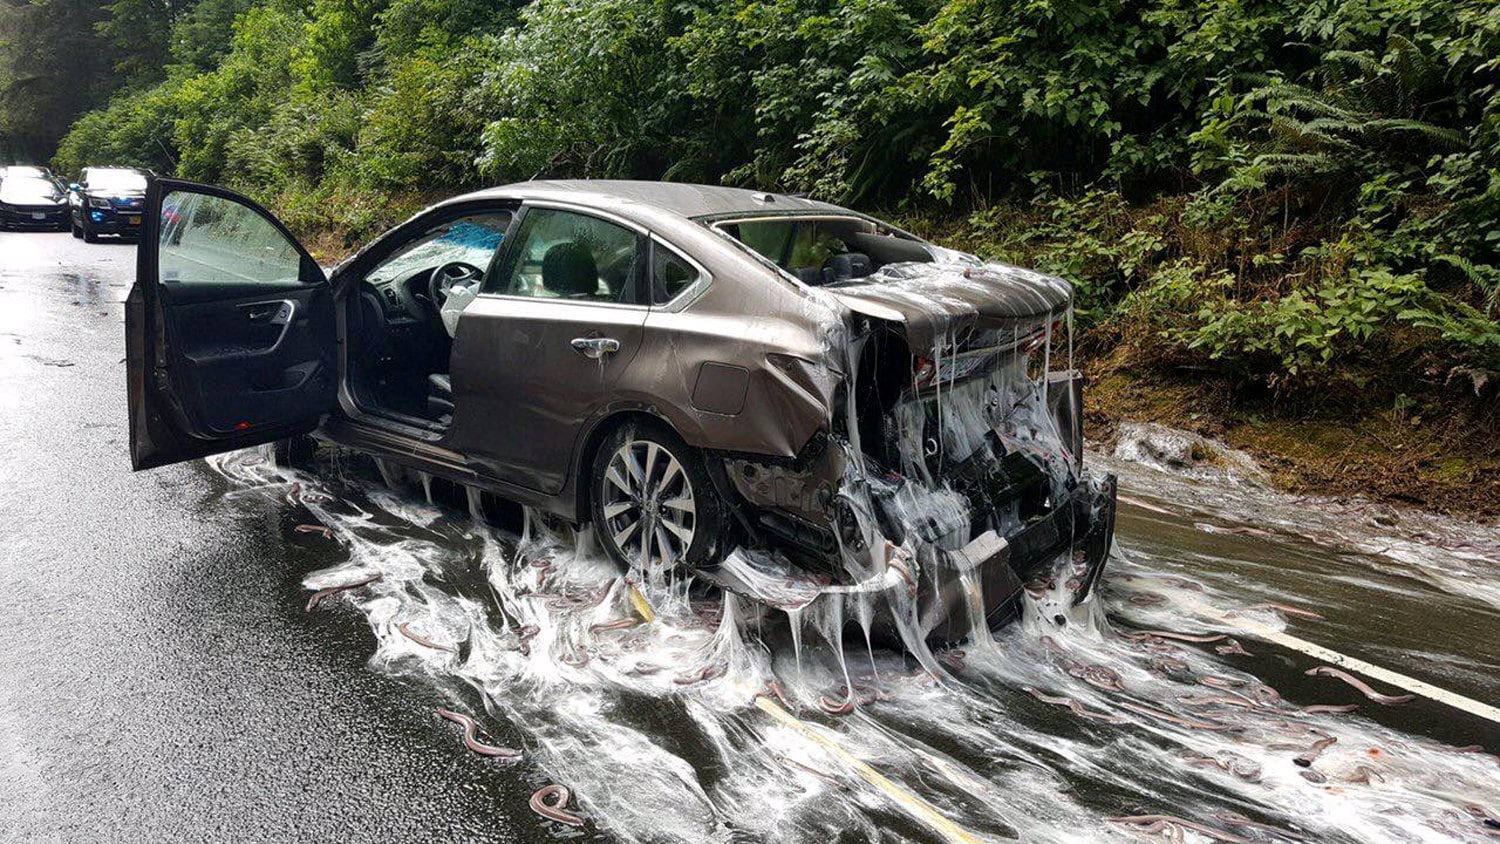 Amerikaanse snelweg wordt slijmbad nadat truck met 'slijmalen' kantelt